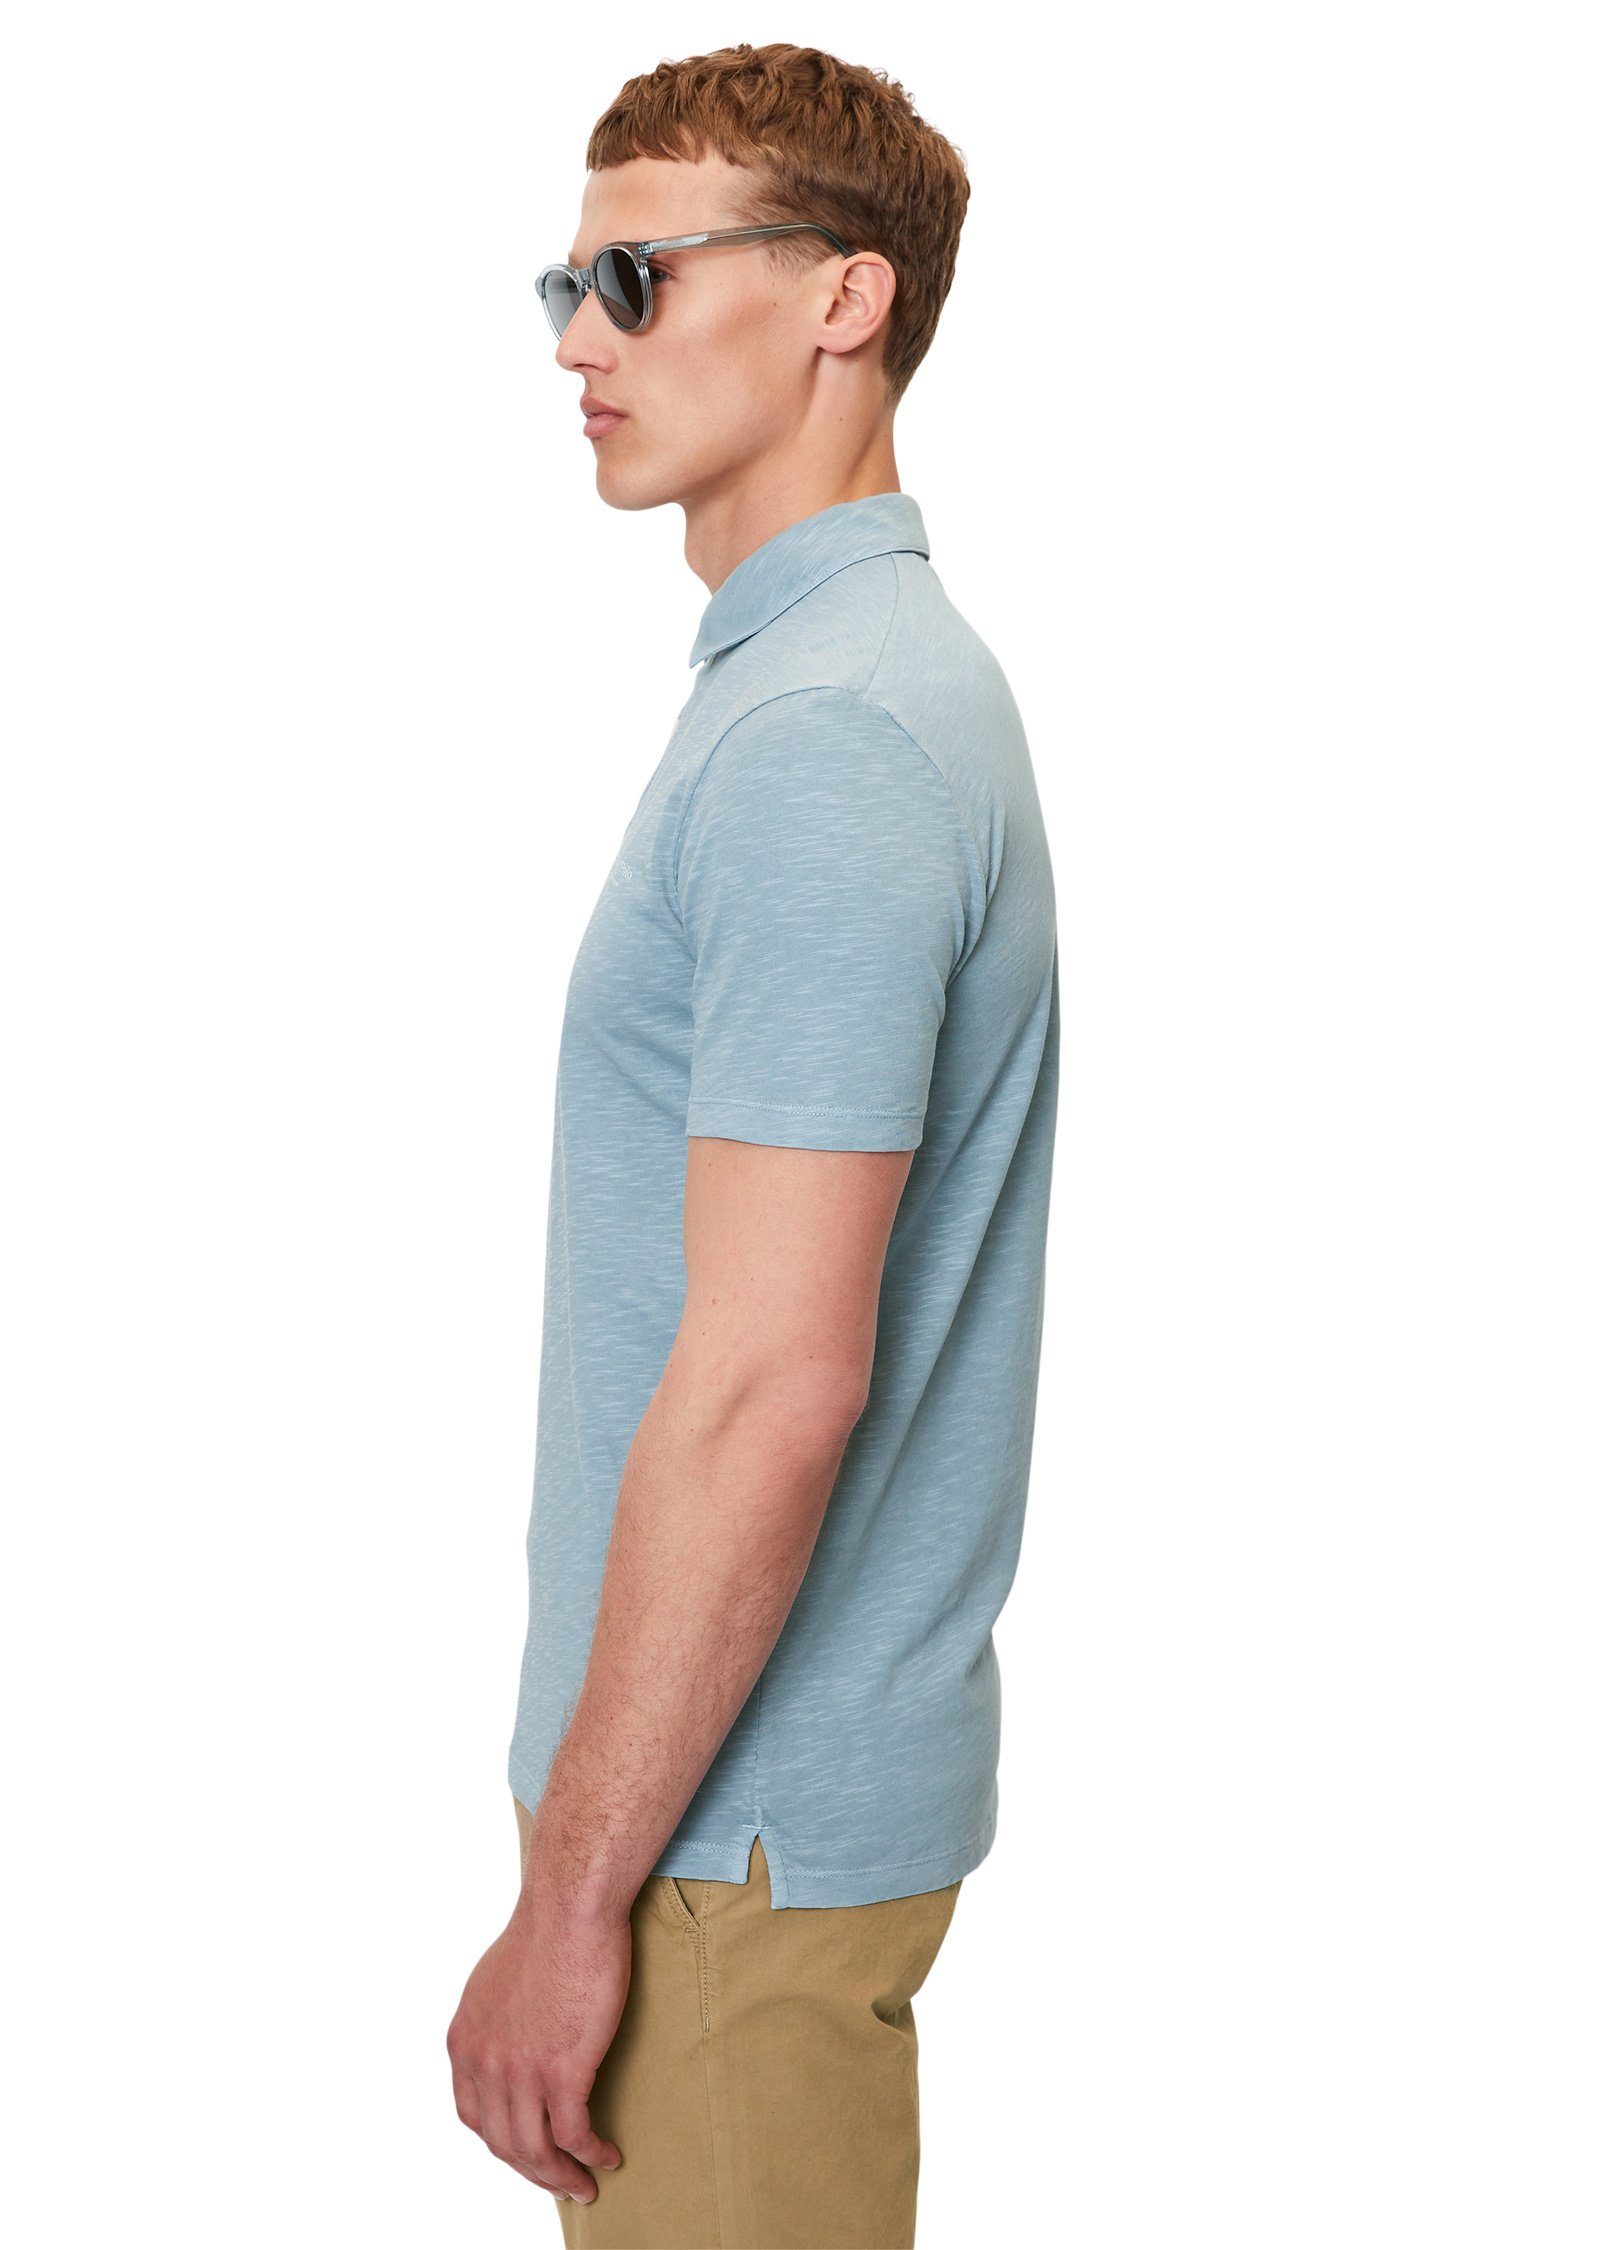 Marc O'Polo mittelblau hochwertiger Poloshirt Bio-Baumwolle aus